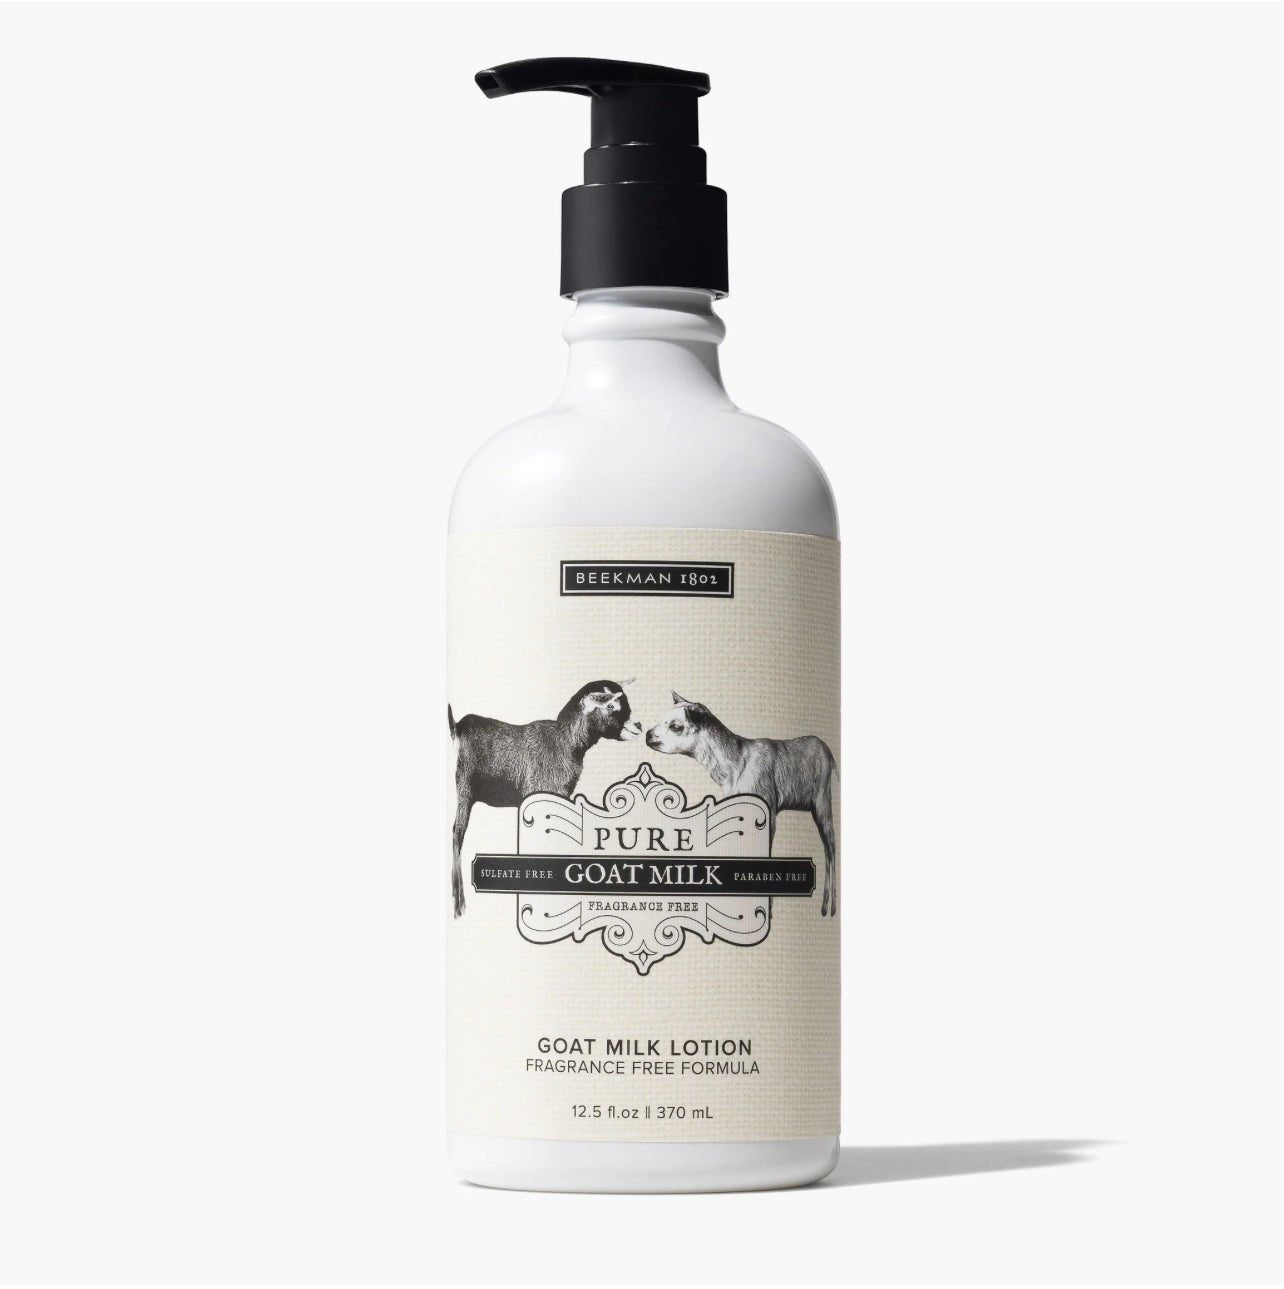 Pure Goat Milk Lotion, 12.5 fl oz, fragrance free, Beekman 1802 - Abigail Fox Designs